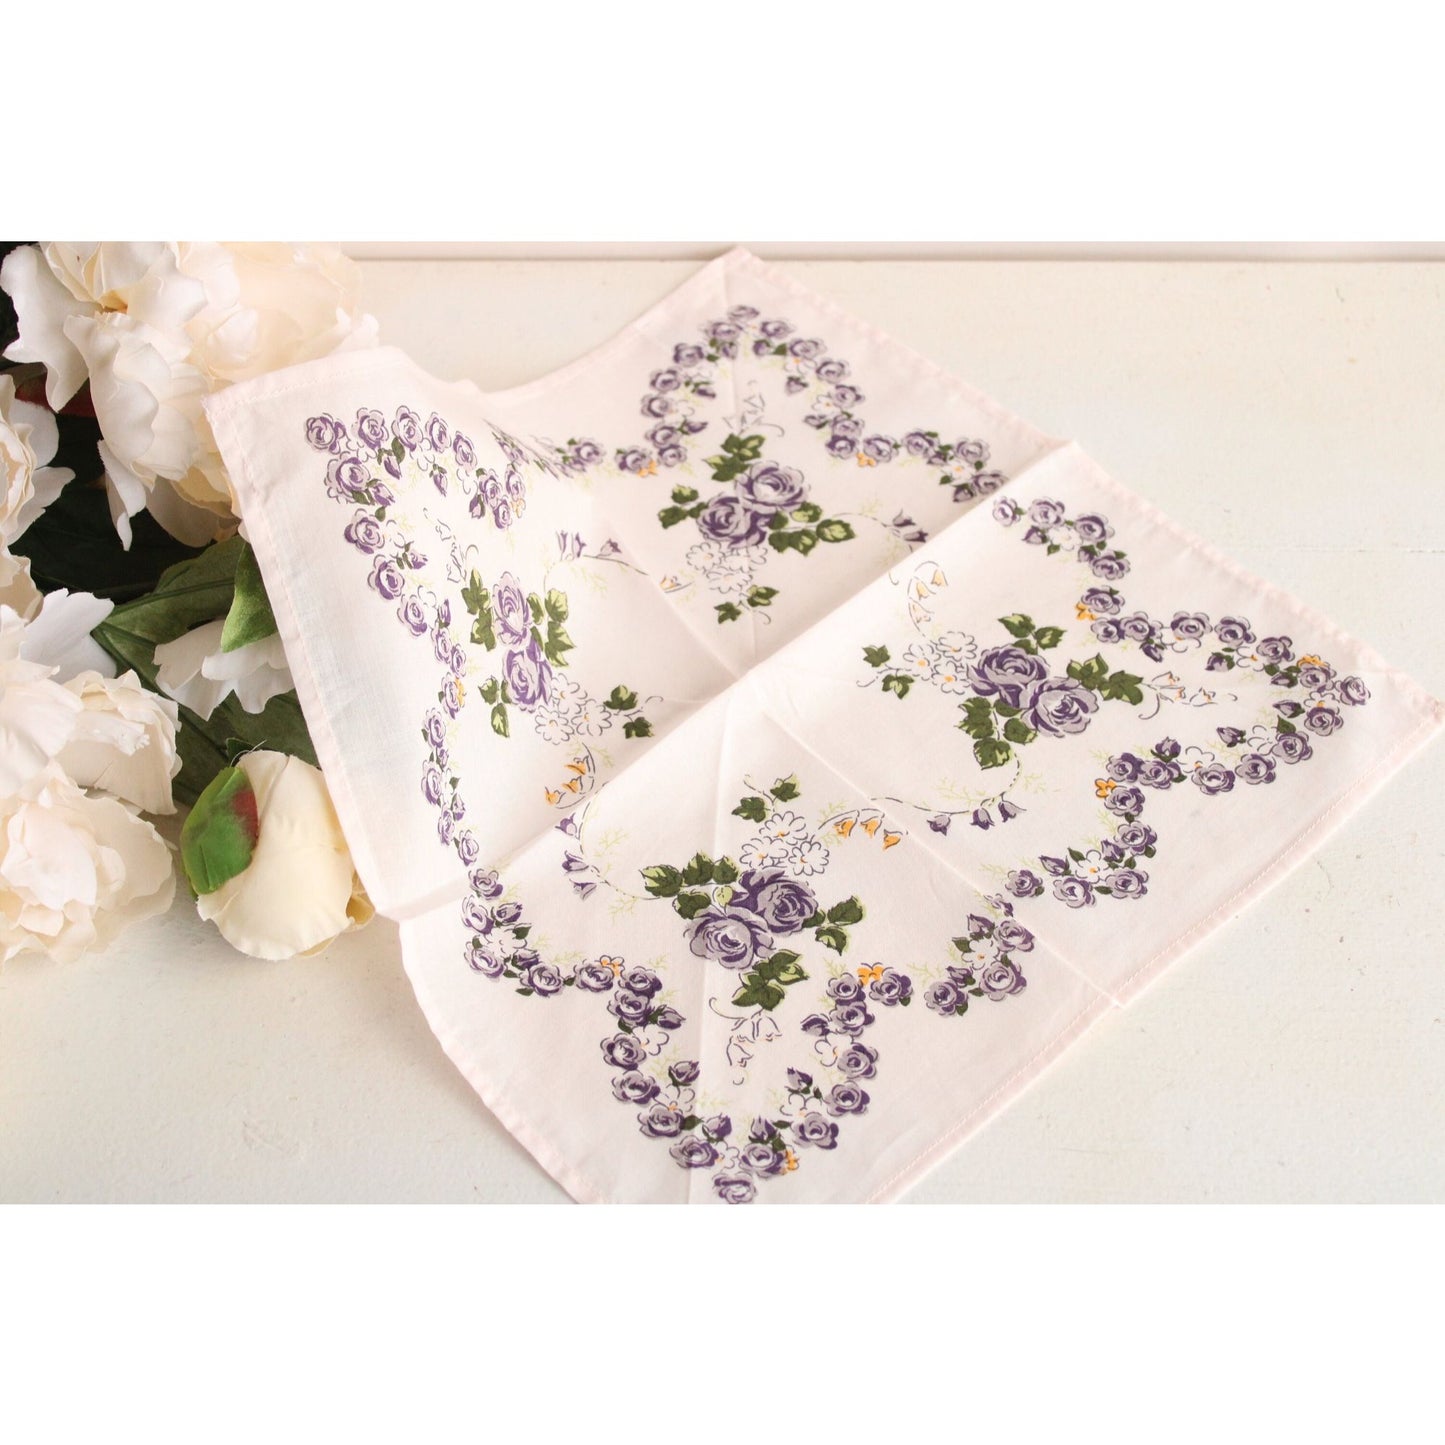 Vintage Cotton Handkerchief With A Purple Rose Floral Print